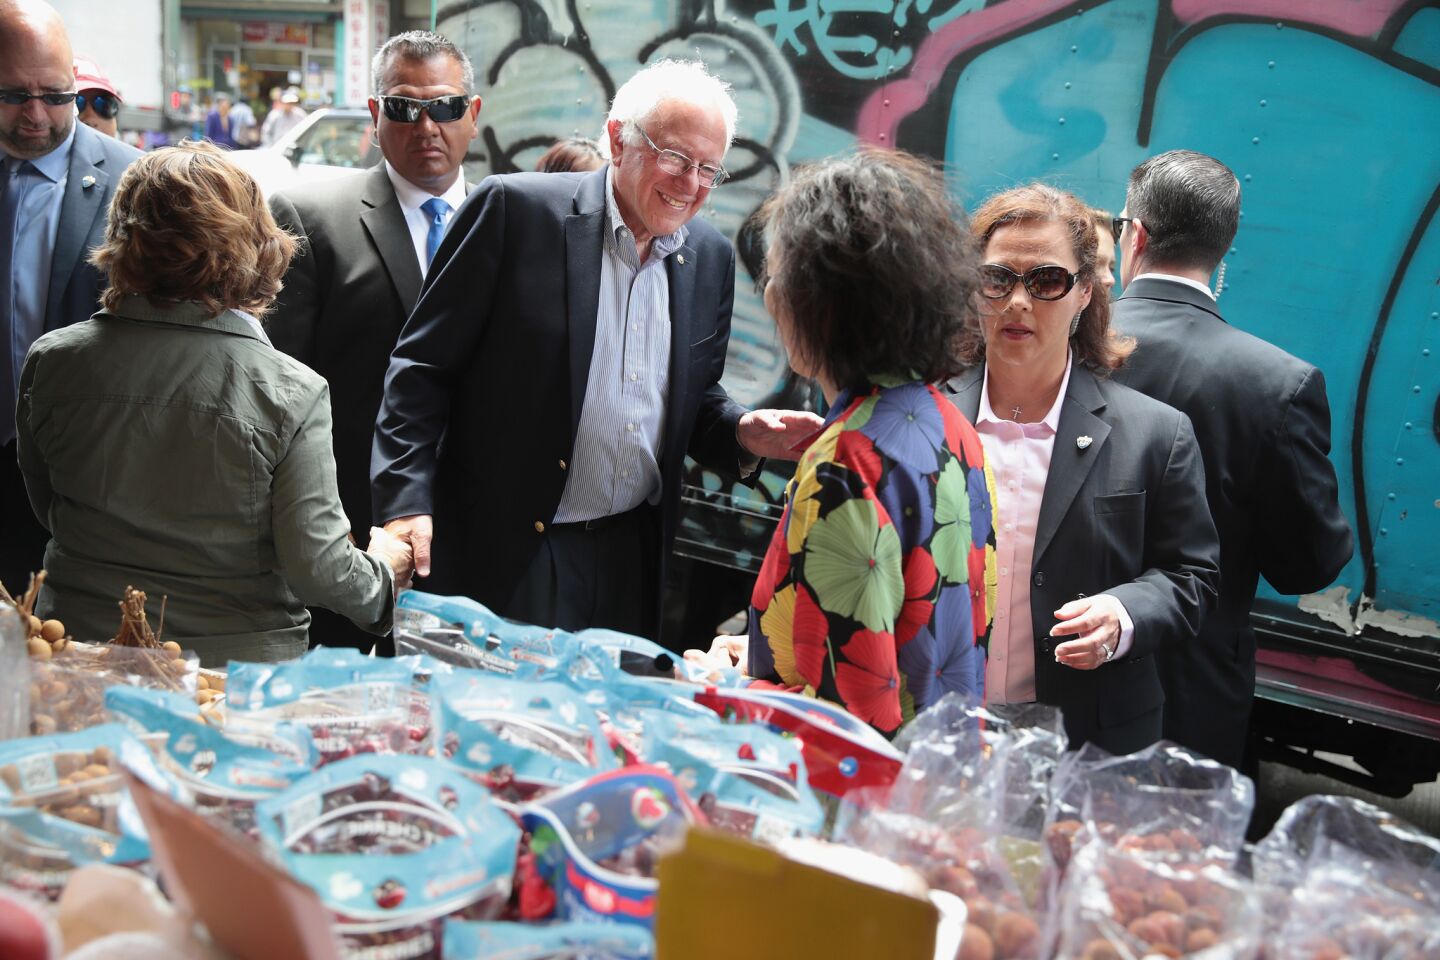 Bernie Sanders campaigns in San Francisco's Chinatown.